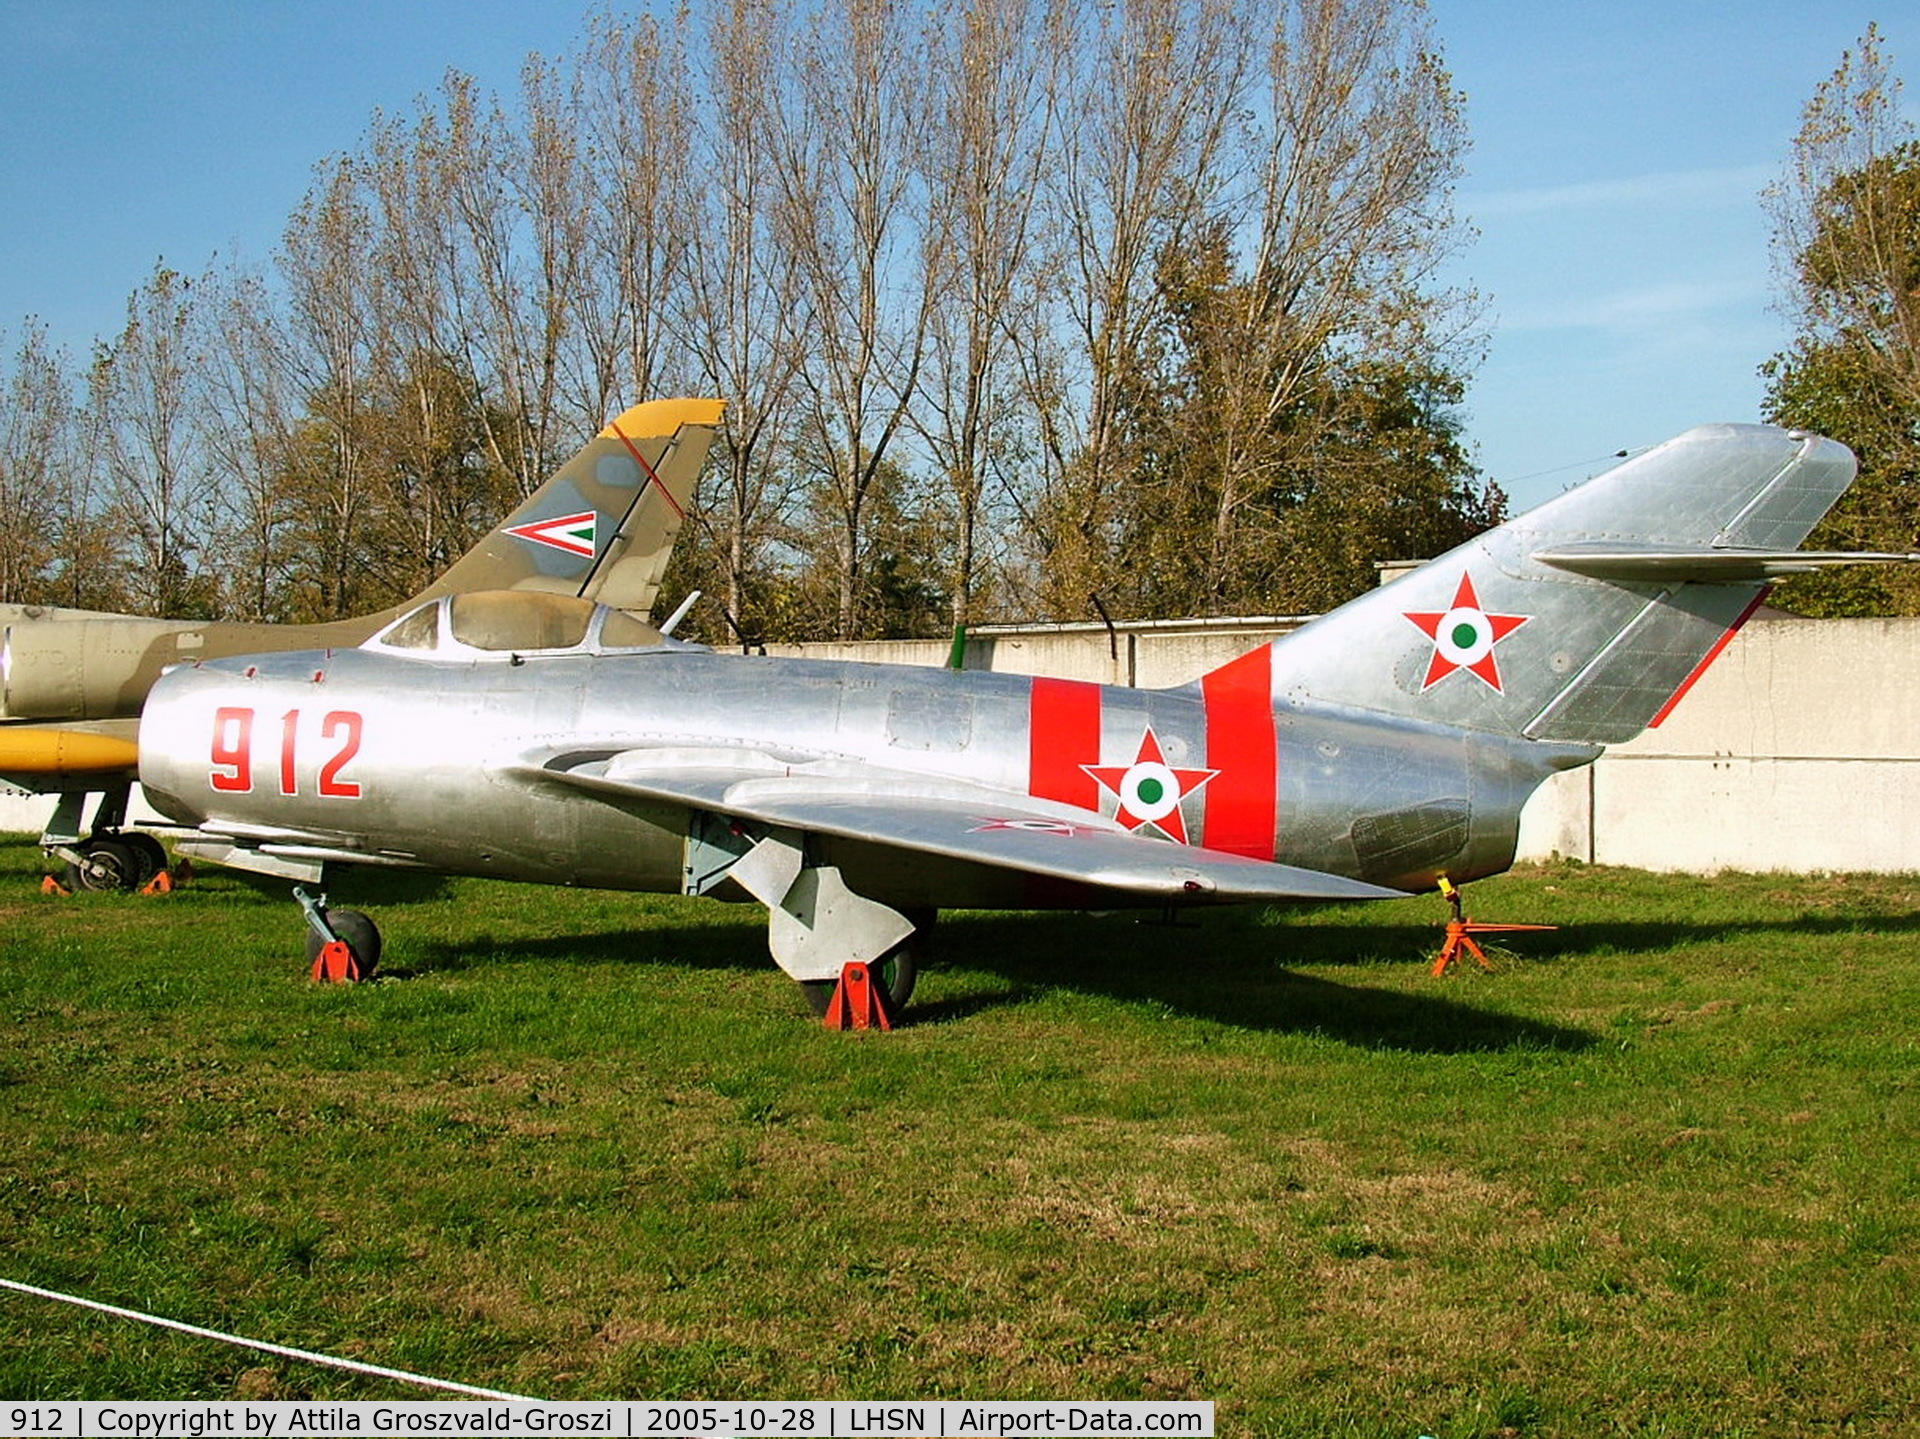 912, Mikoyan-Gurevich MiG-15bis C/N 31530912, Szolnok airplane museum, Hungary